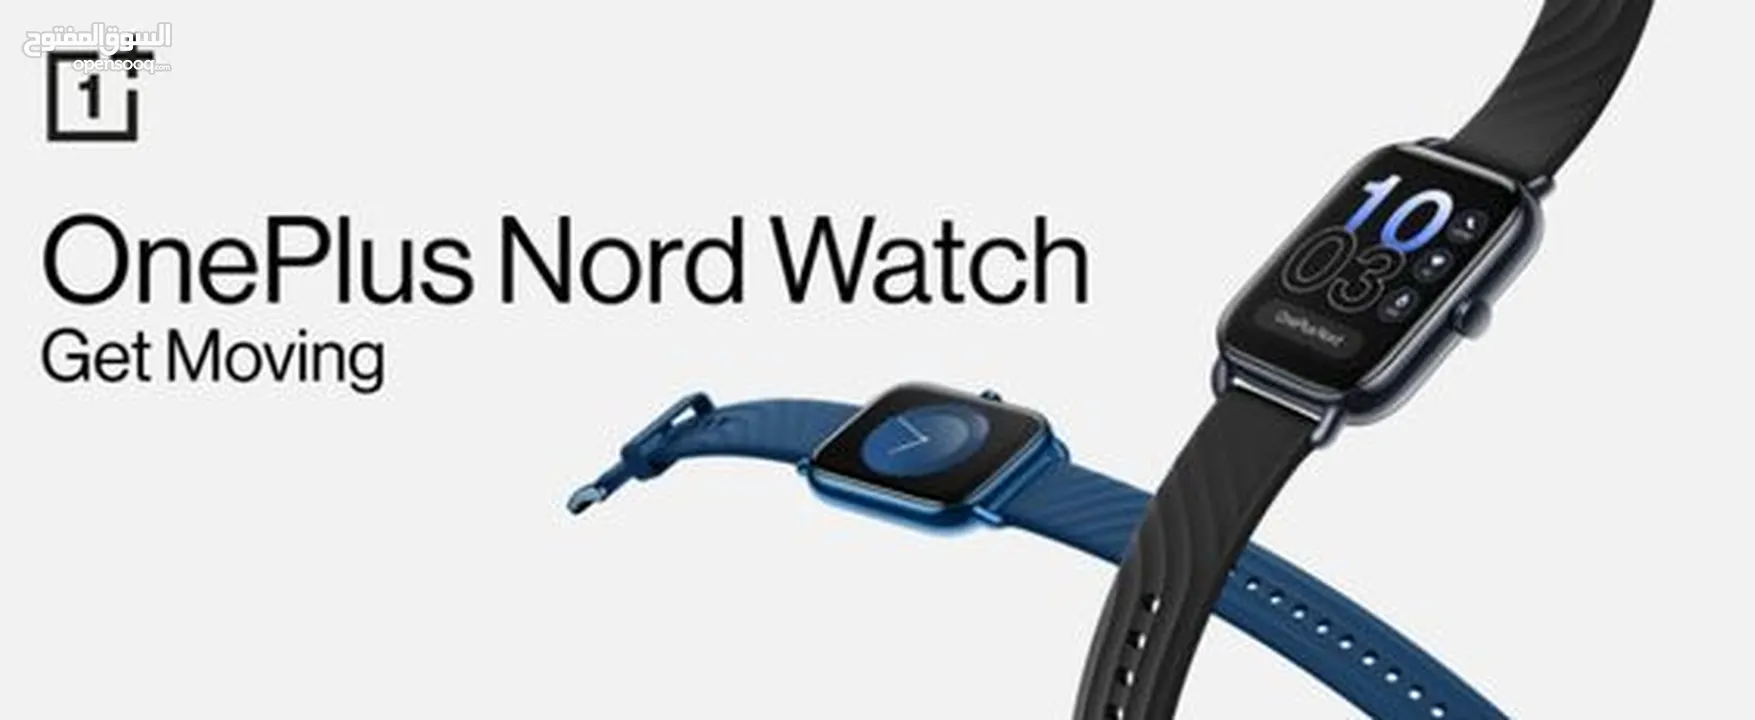 Oneplus Nord watch ون بلس نورد واتش